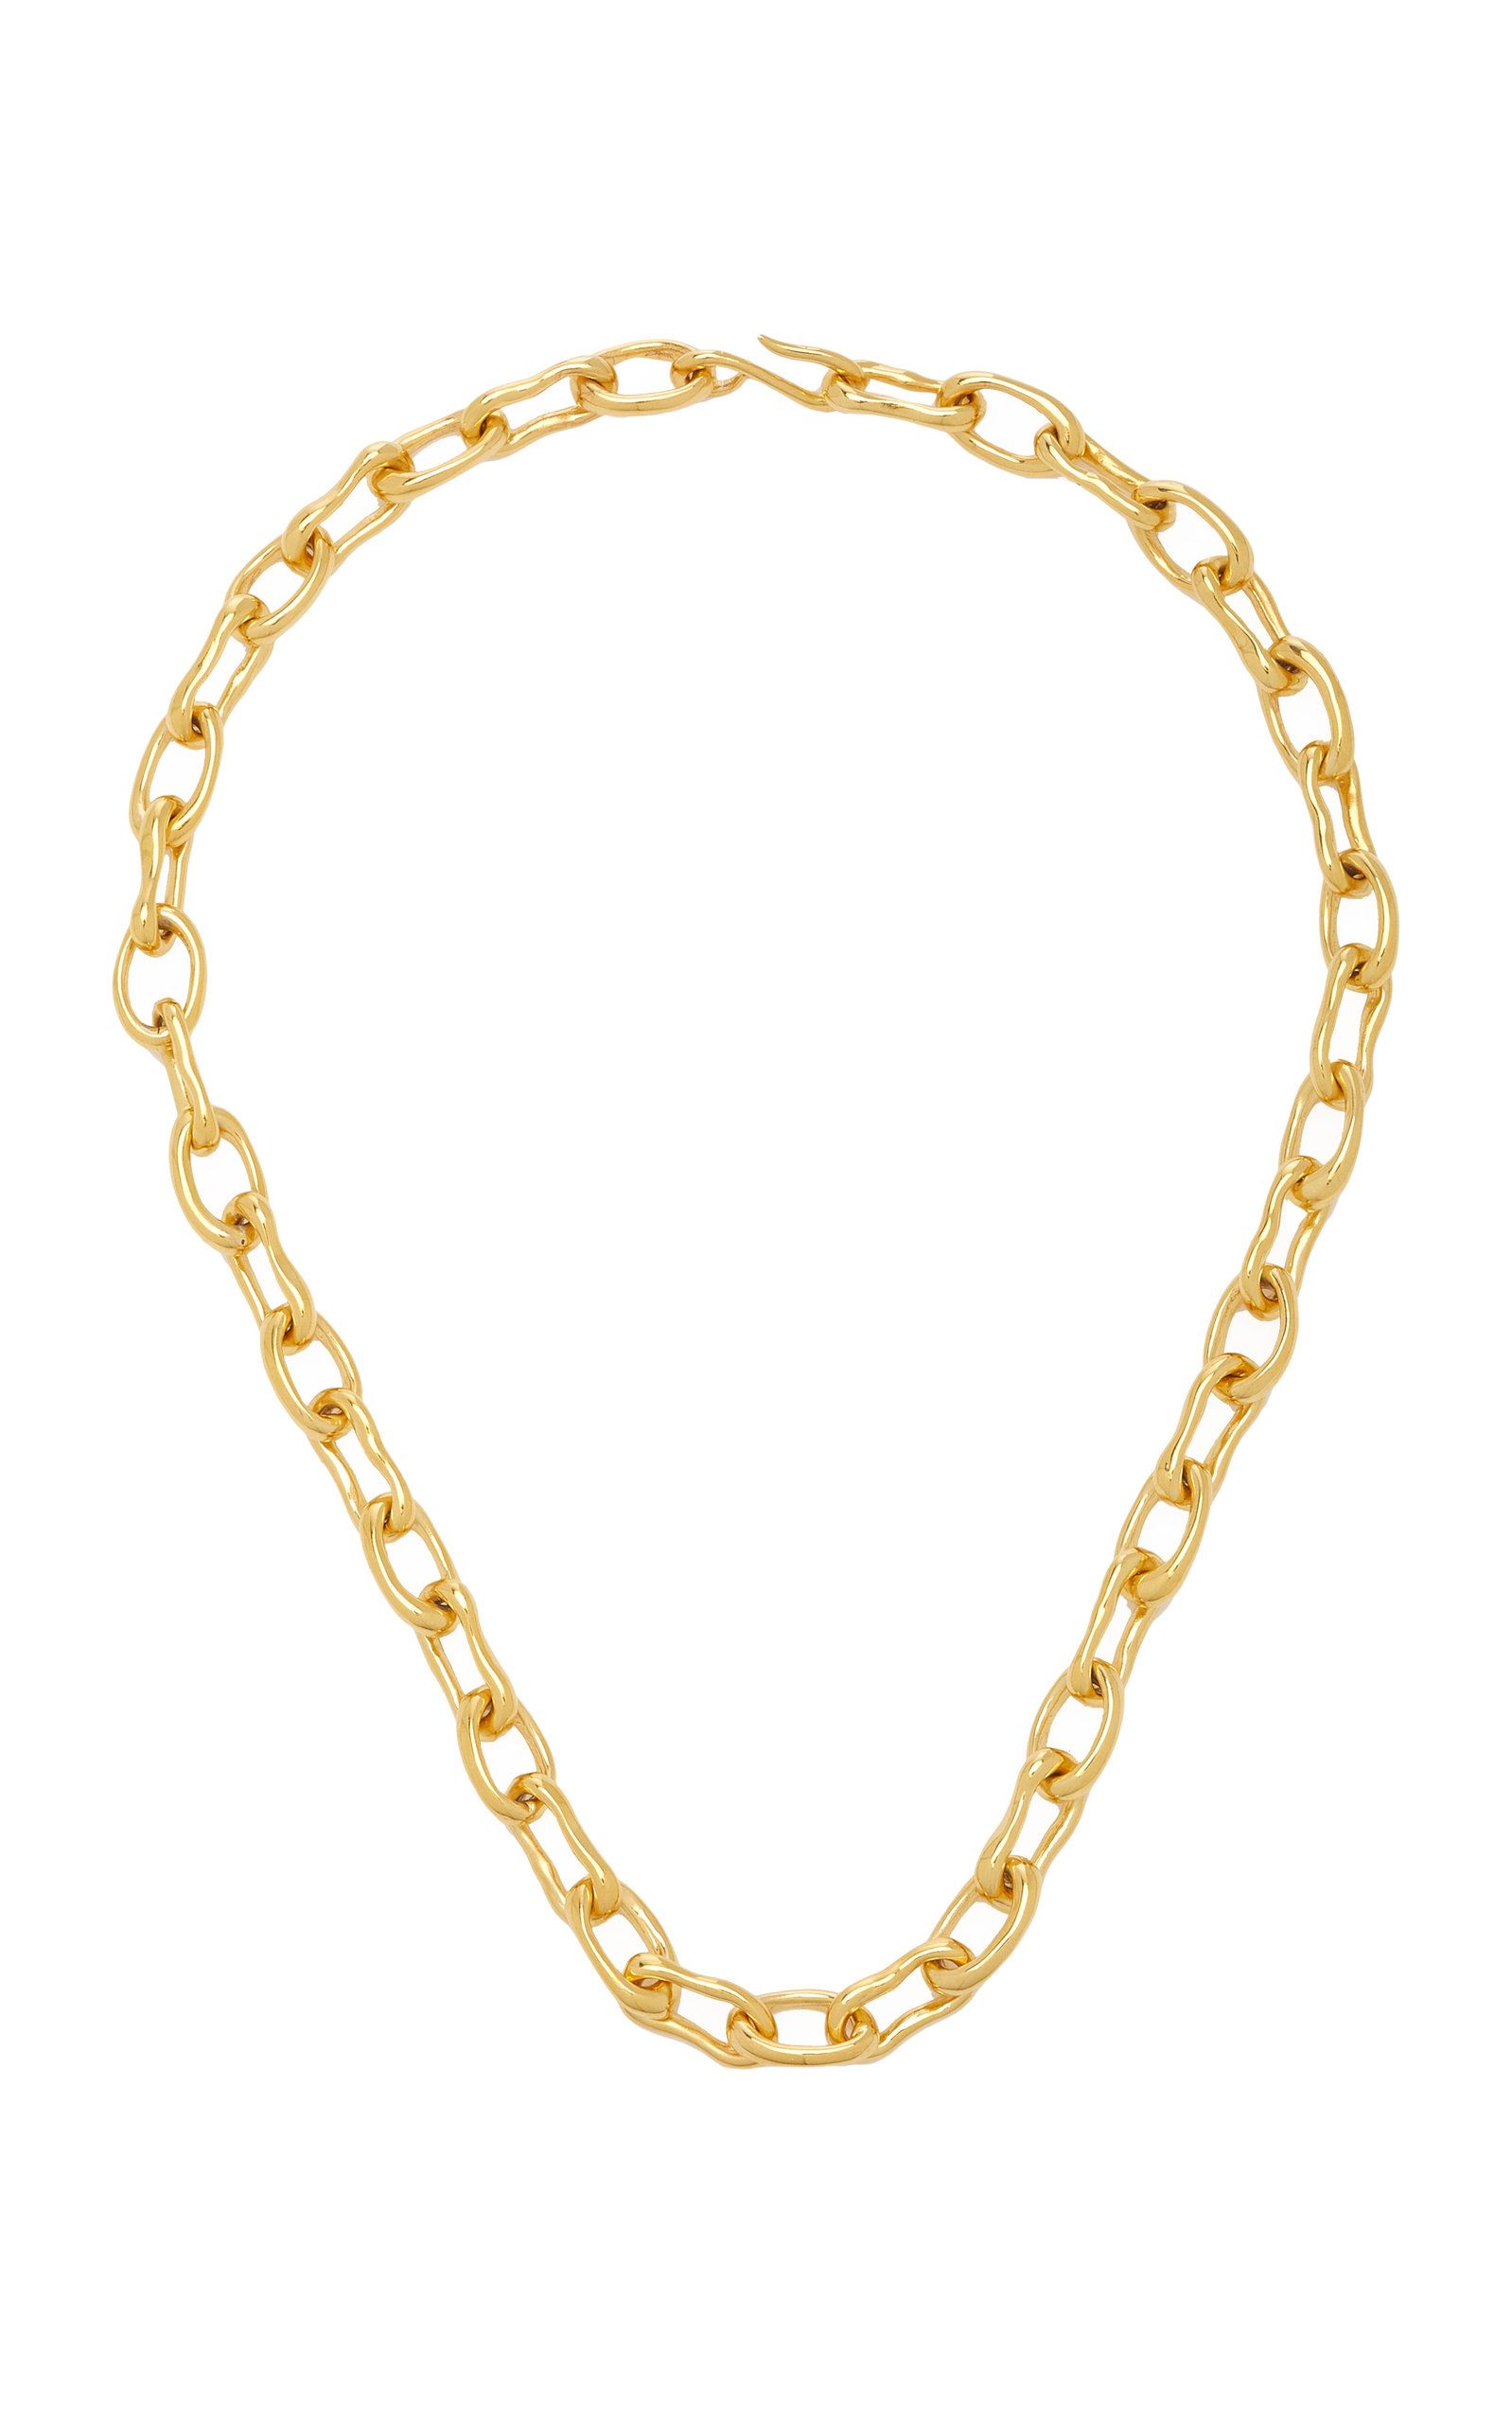 Sophie Buhai - Women's Small 18k Gold Vermeil Roman Chain Necklace - Gold - Moda Operandi - Gifts Fo | Moda Operandi (Global)